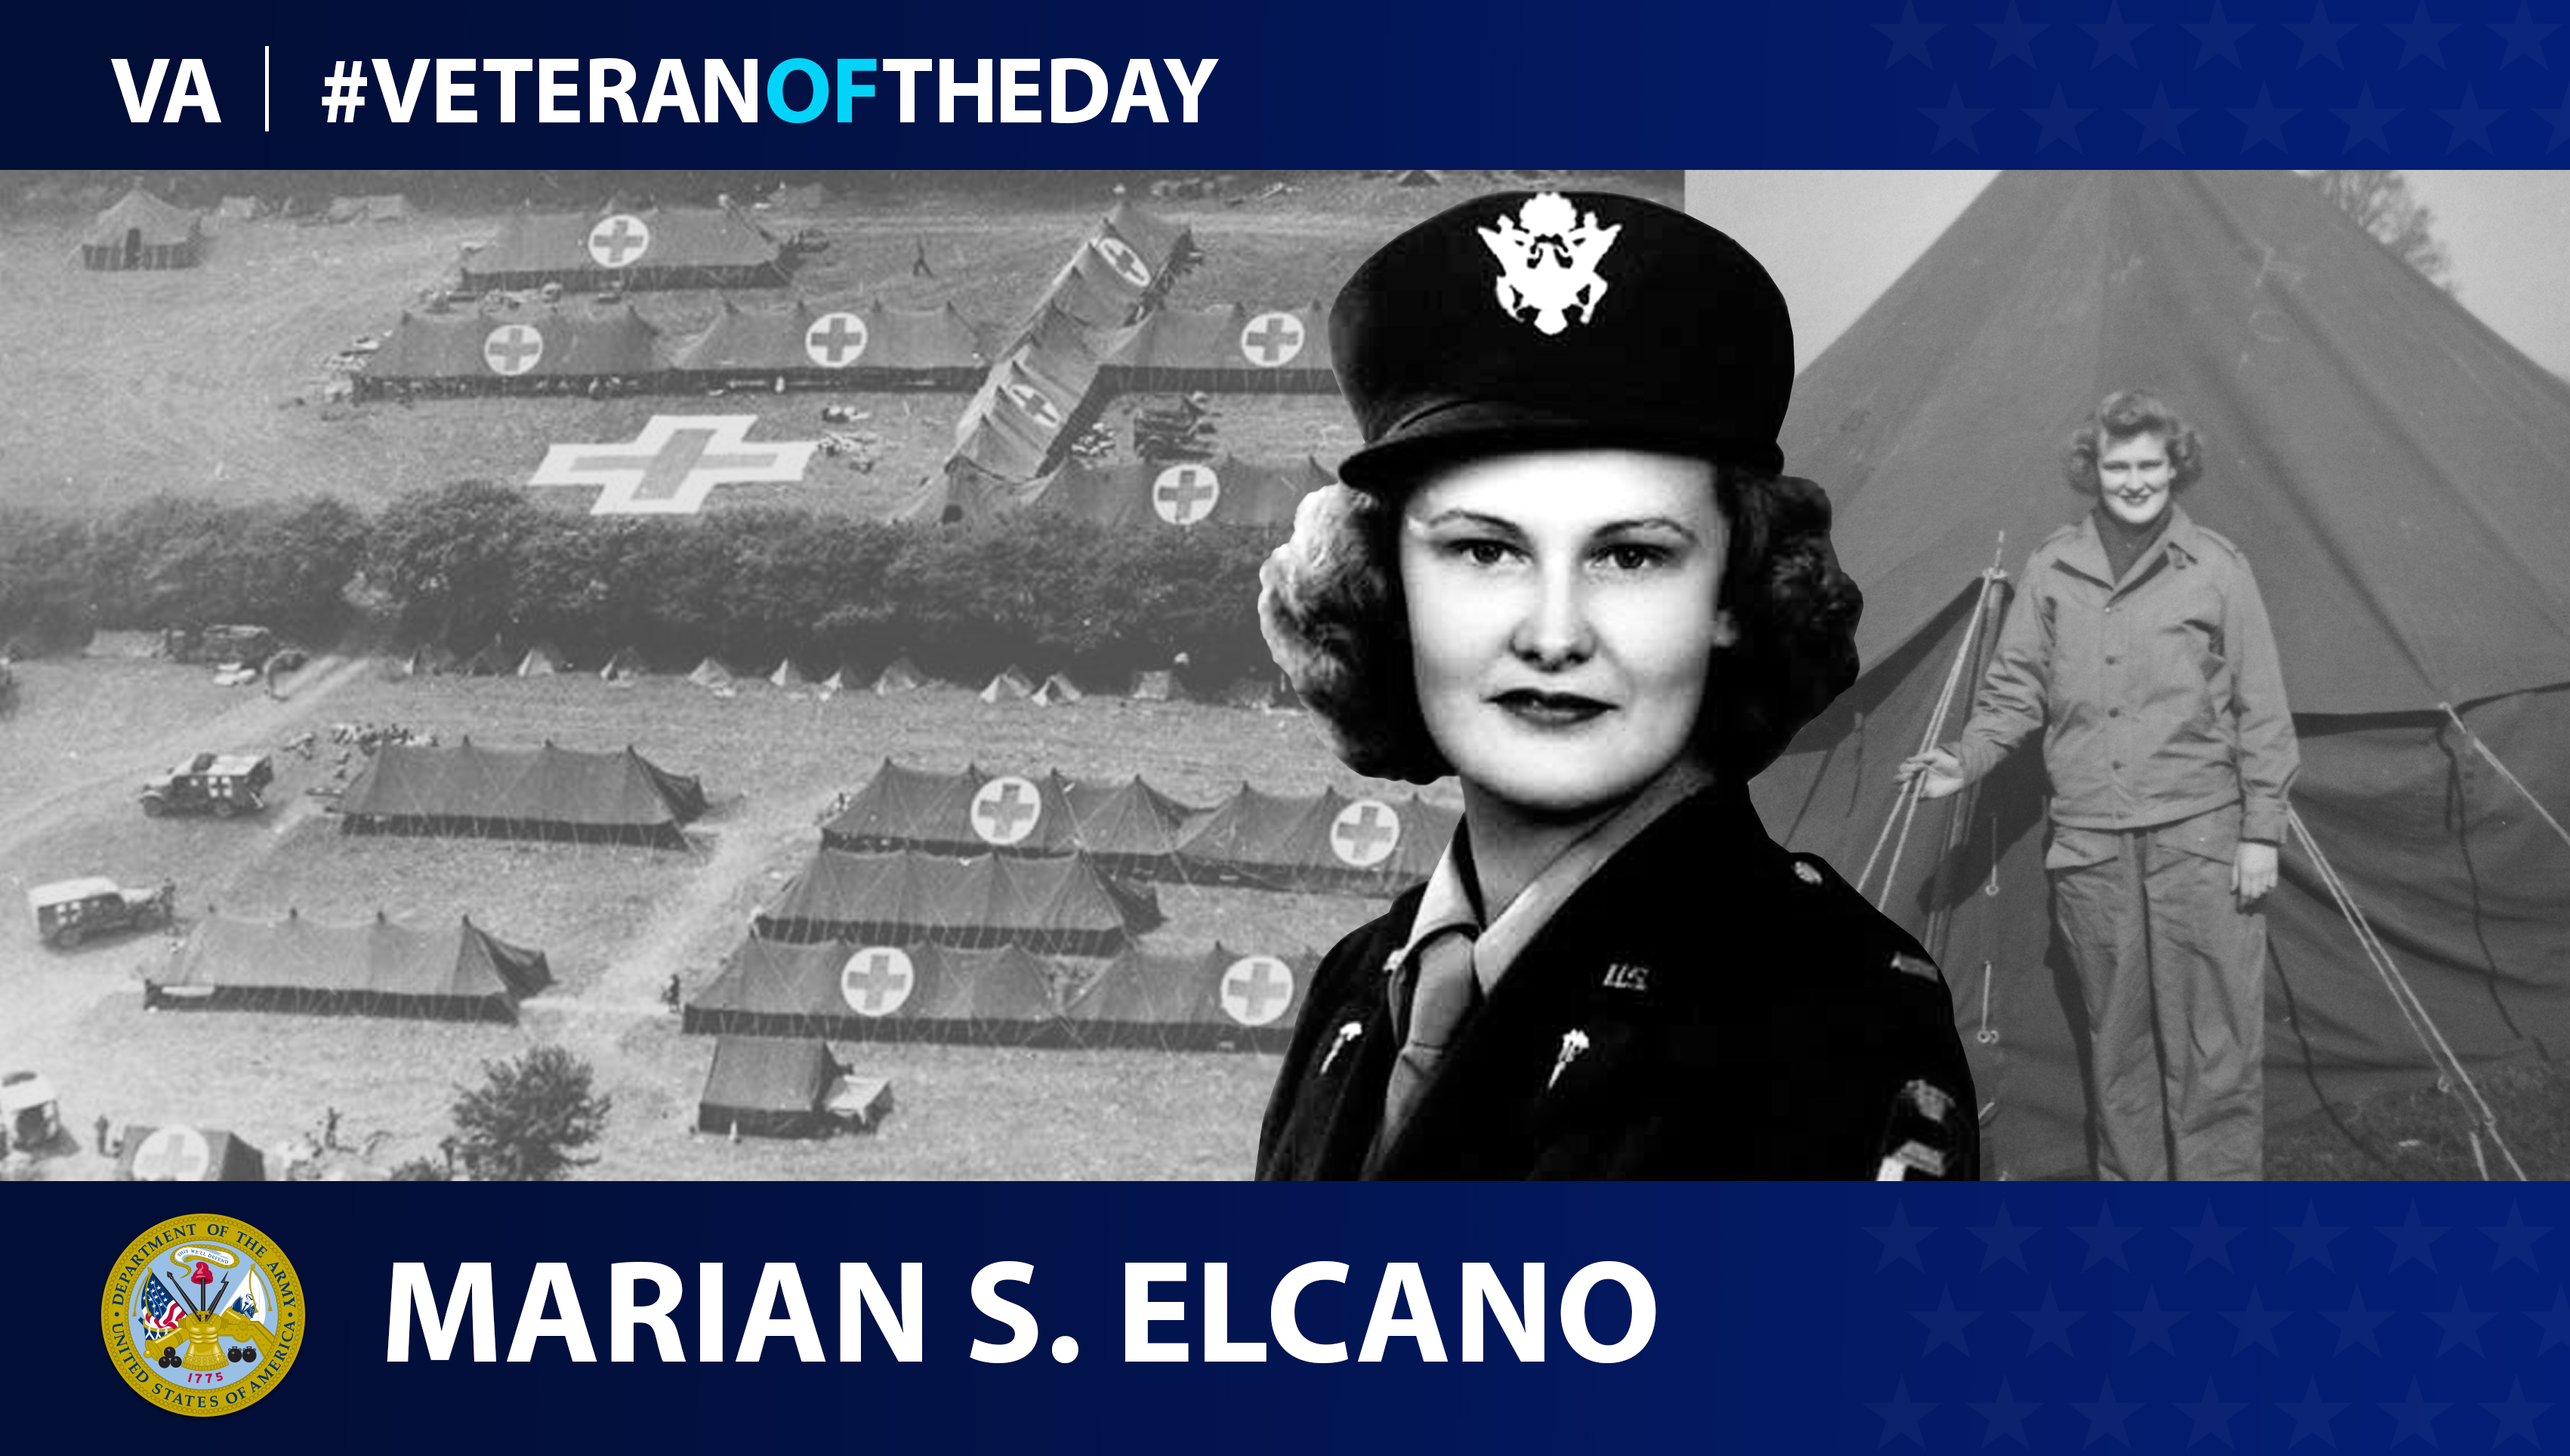 Army Veteran Marian Rebecca Sebring Elcano is today's Veteran of the Day.